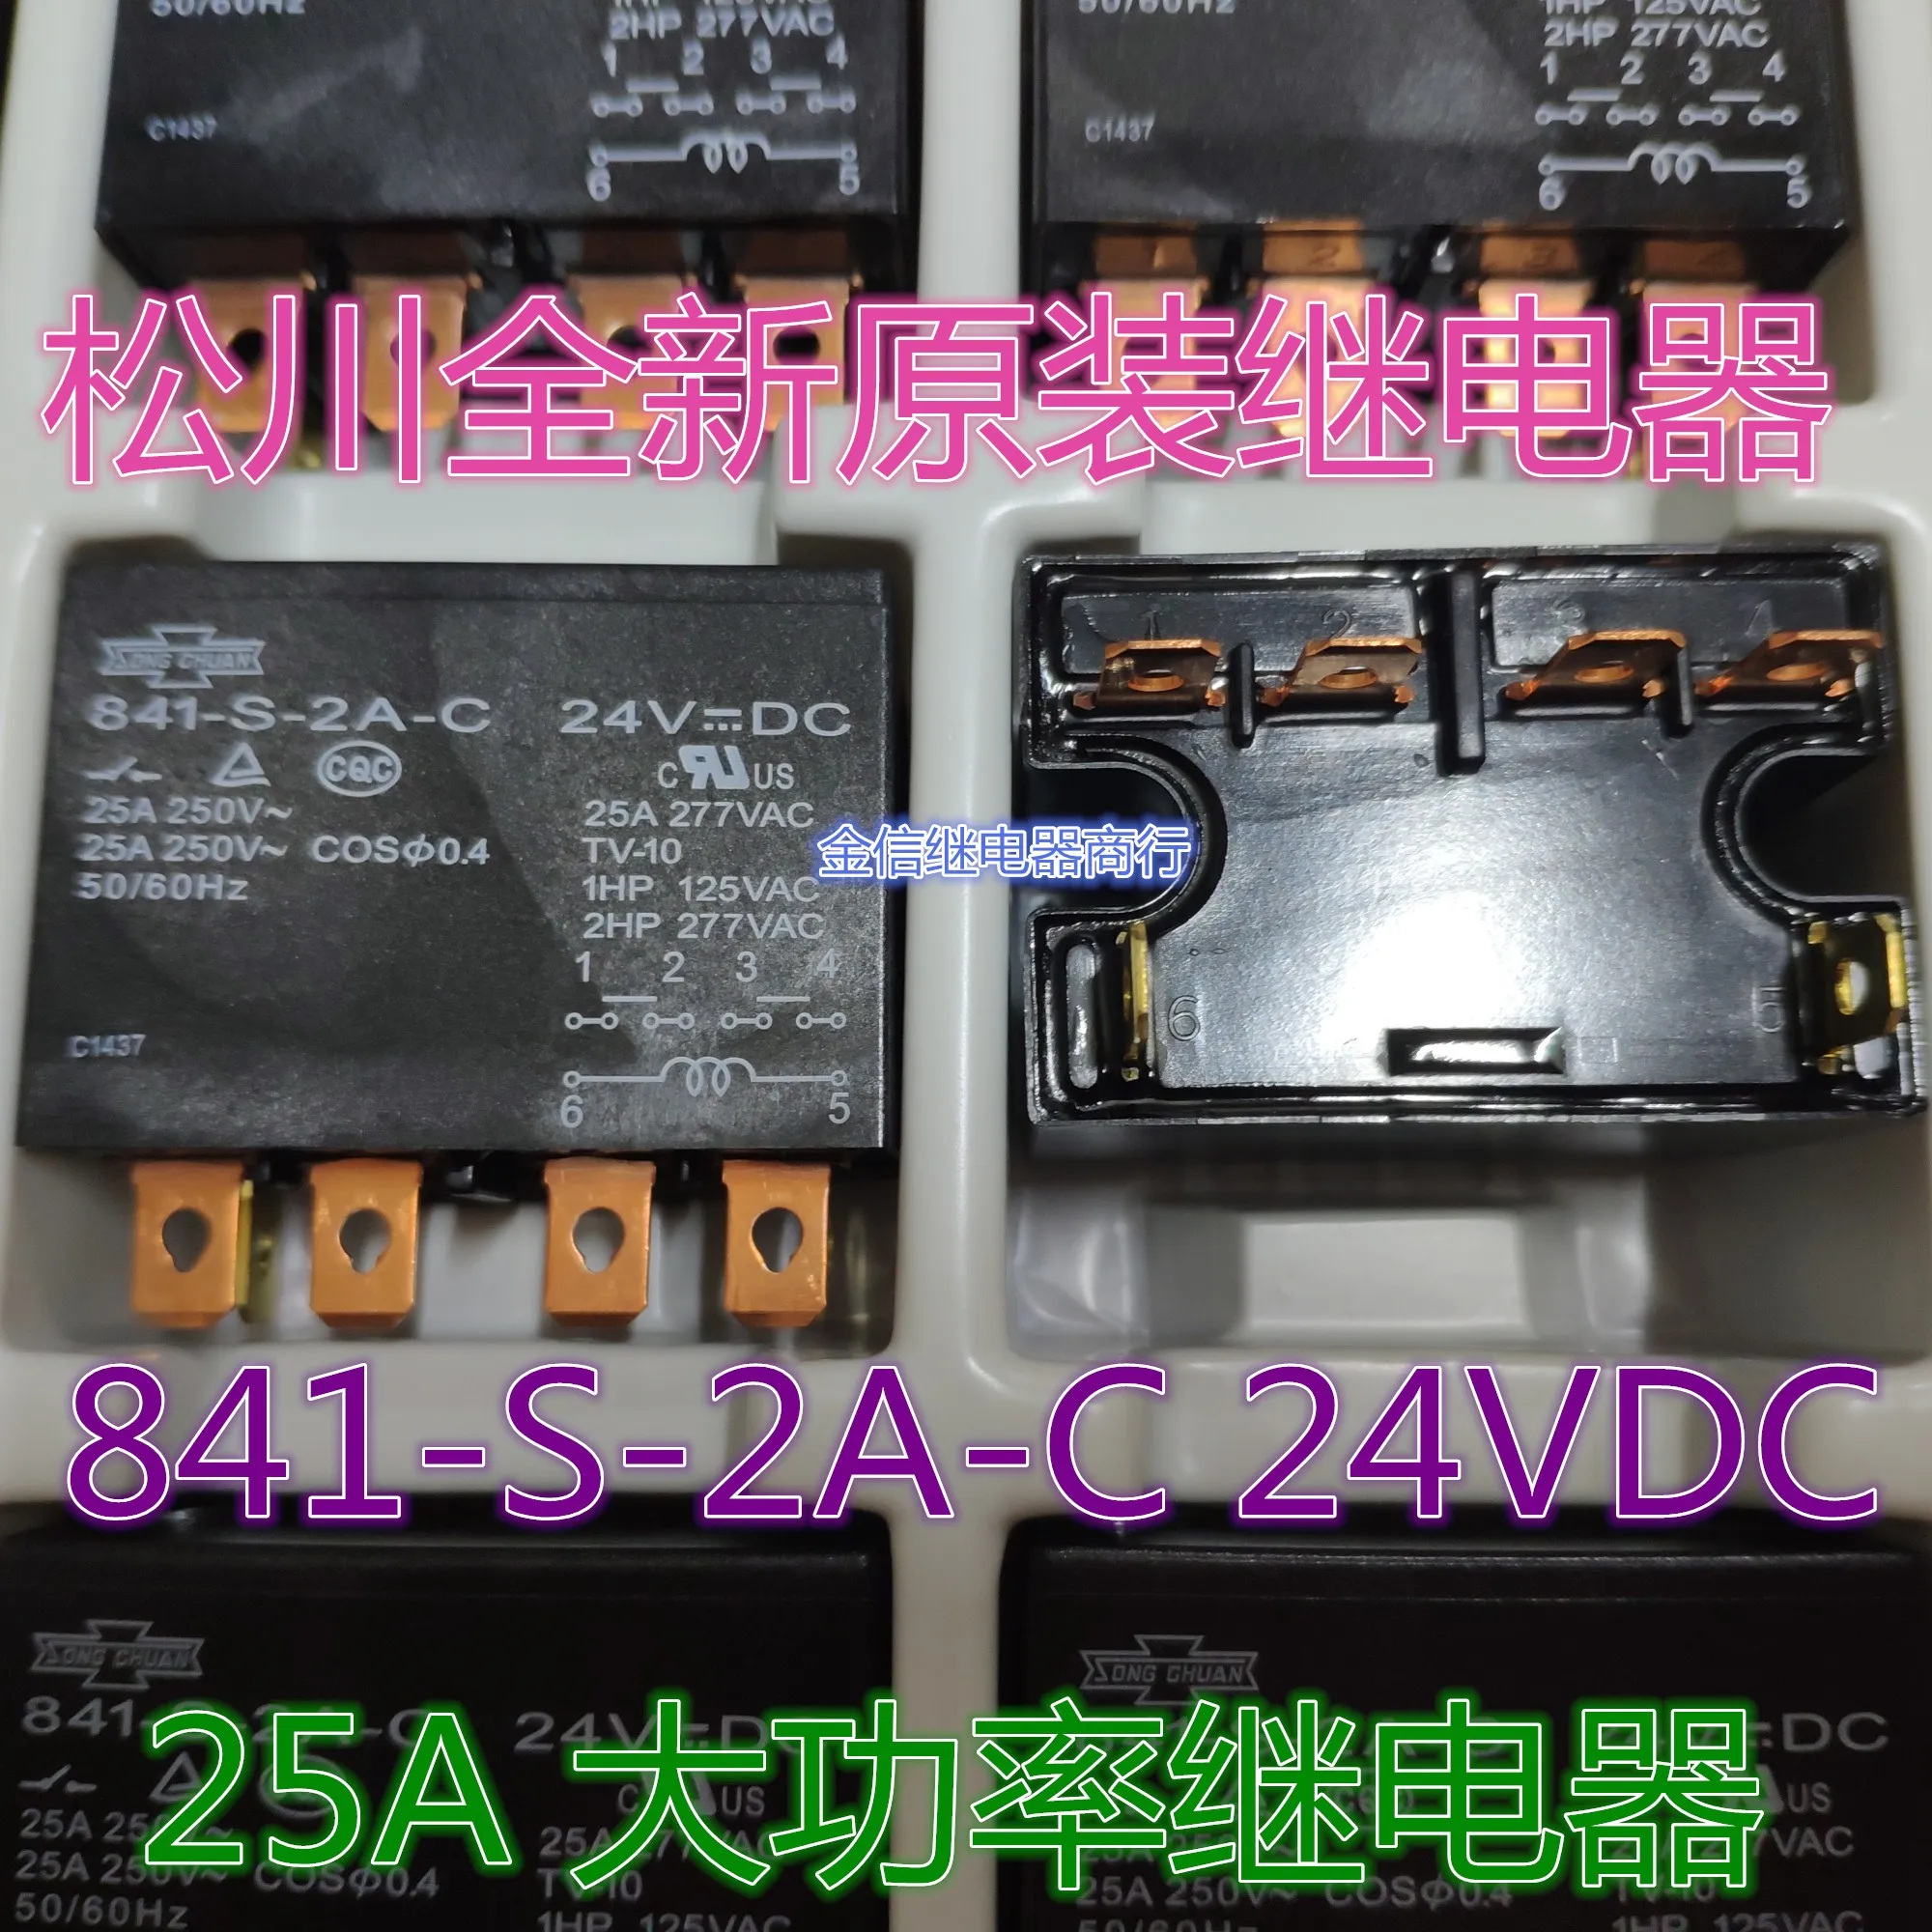 

Free shipping 841-S-2A-C 24VDC 10pcs As shown